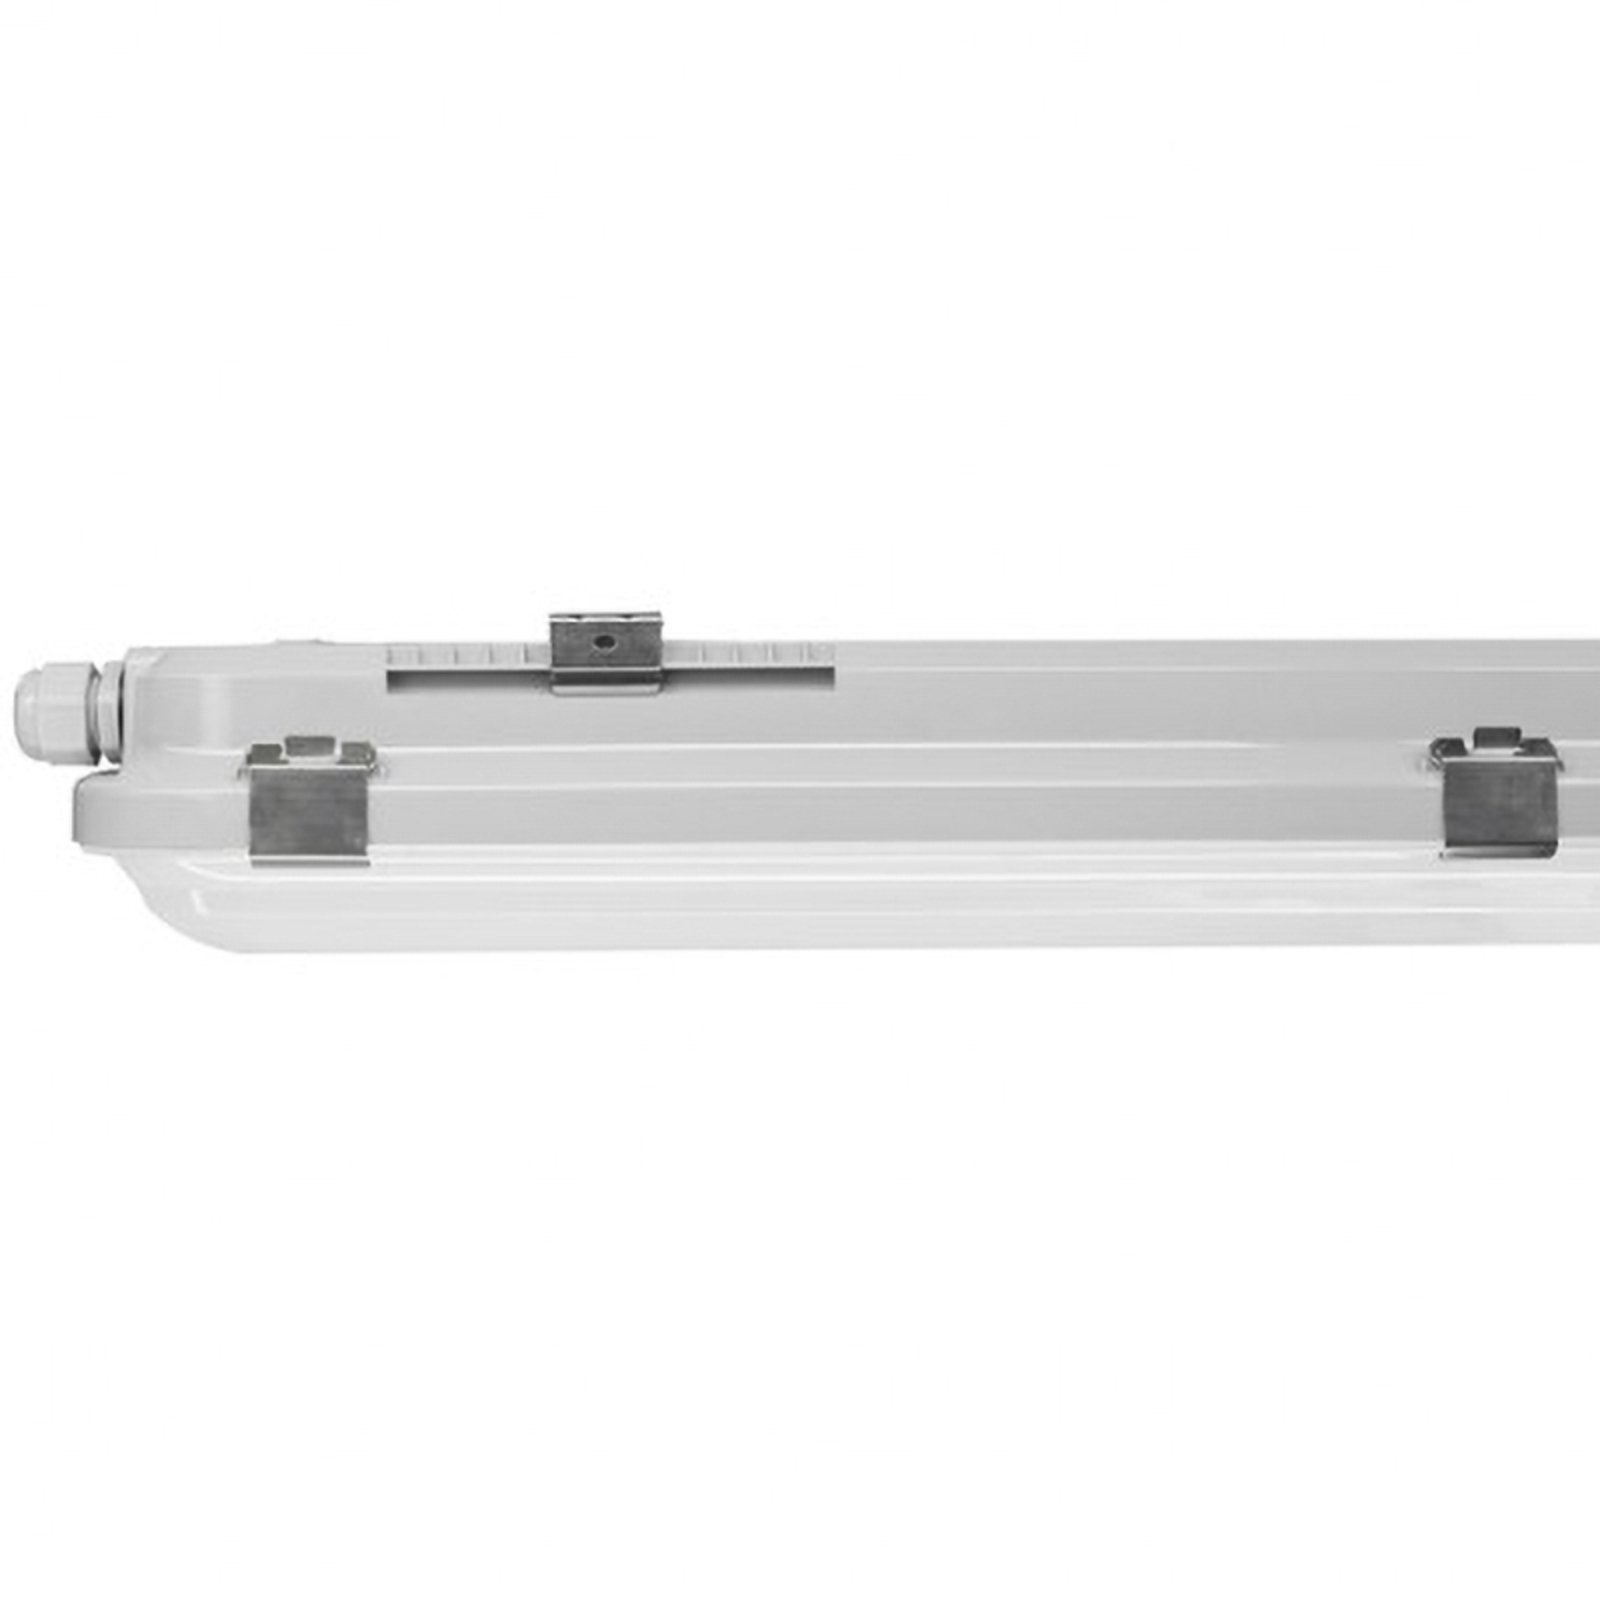 InnoGreen AQUOS 3.0 BASELine luminaire LED 152cm 840